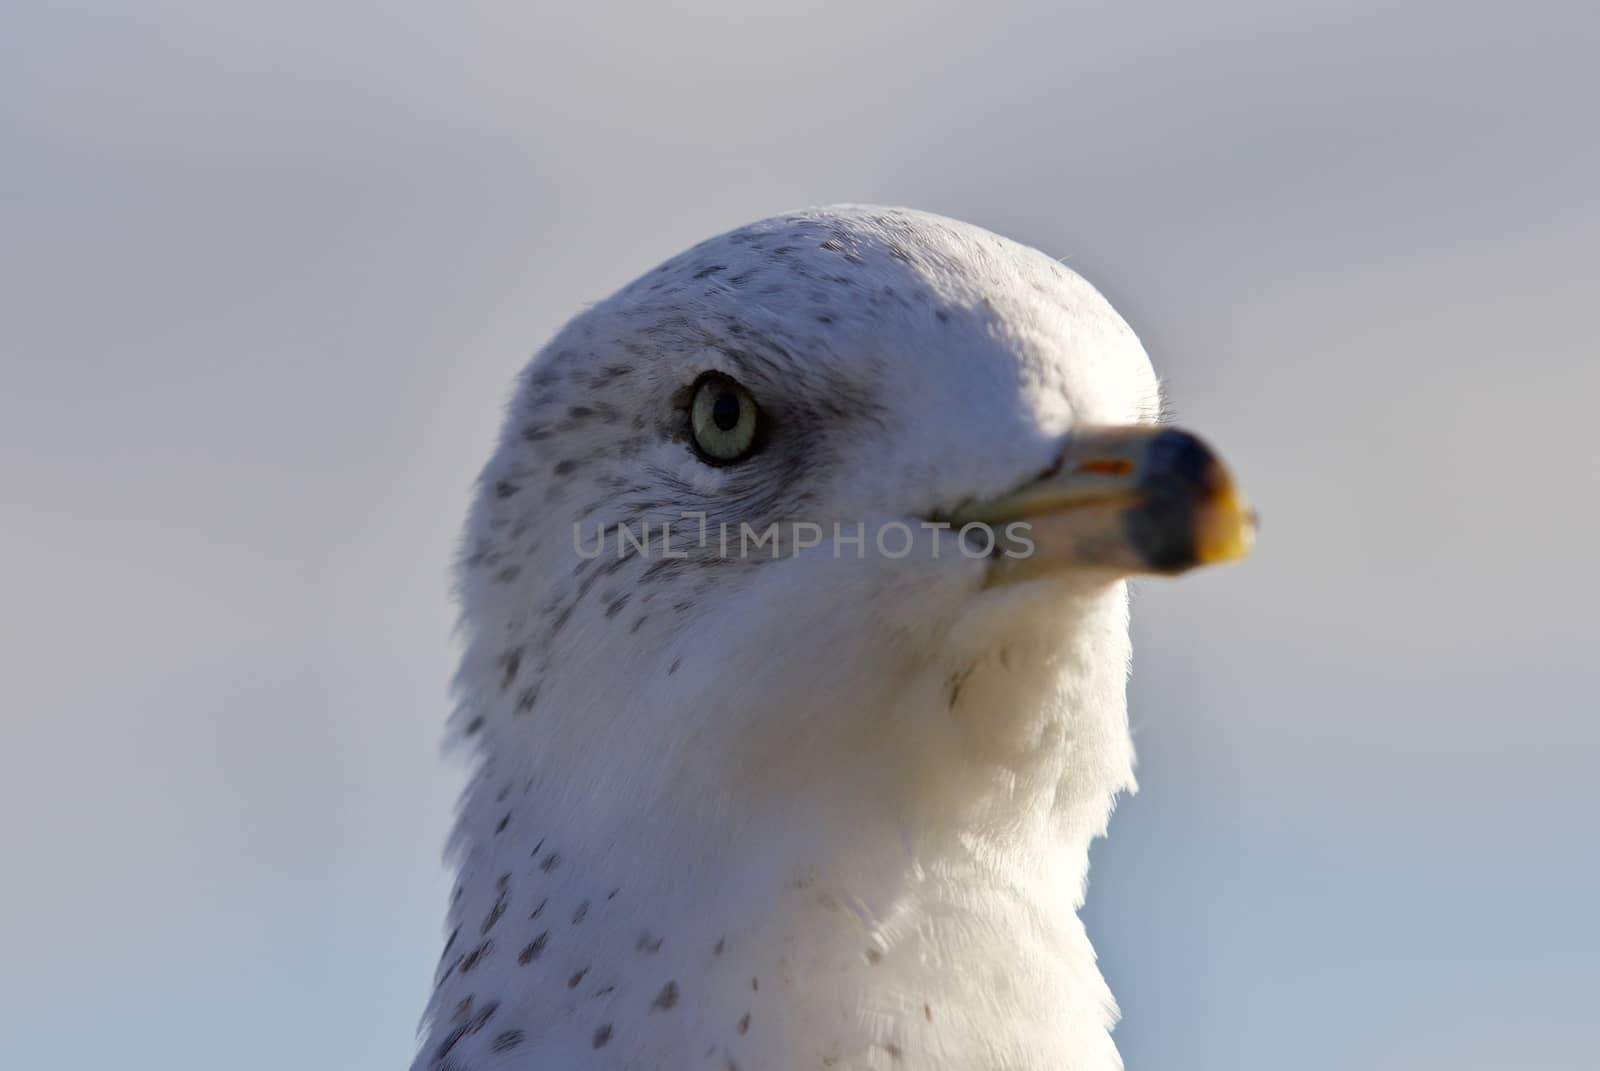 Amazing portrait of a cute beautiful gull by teo